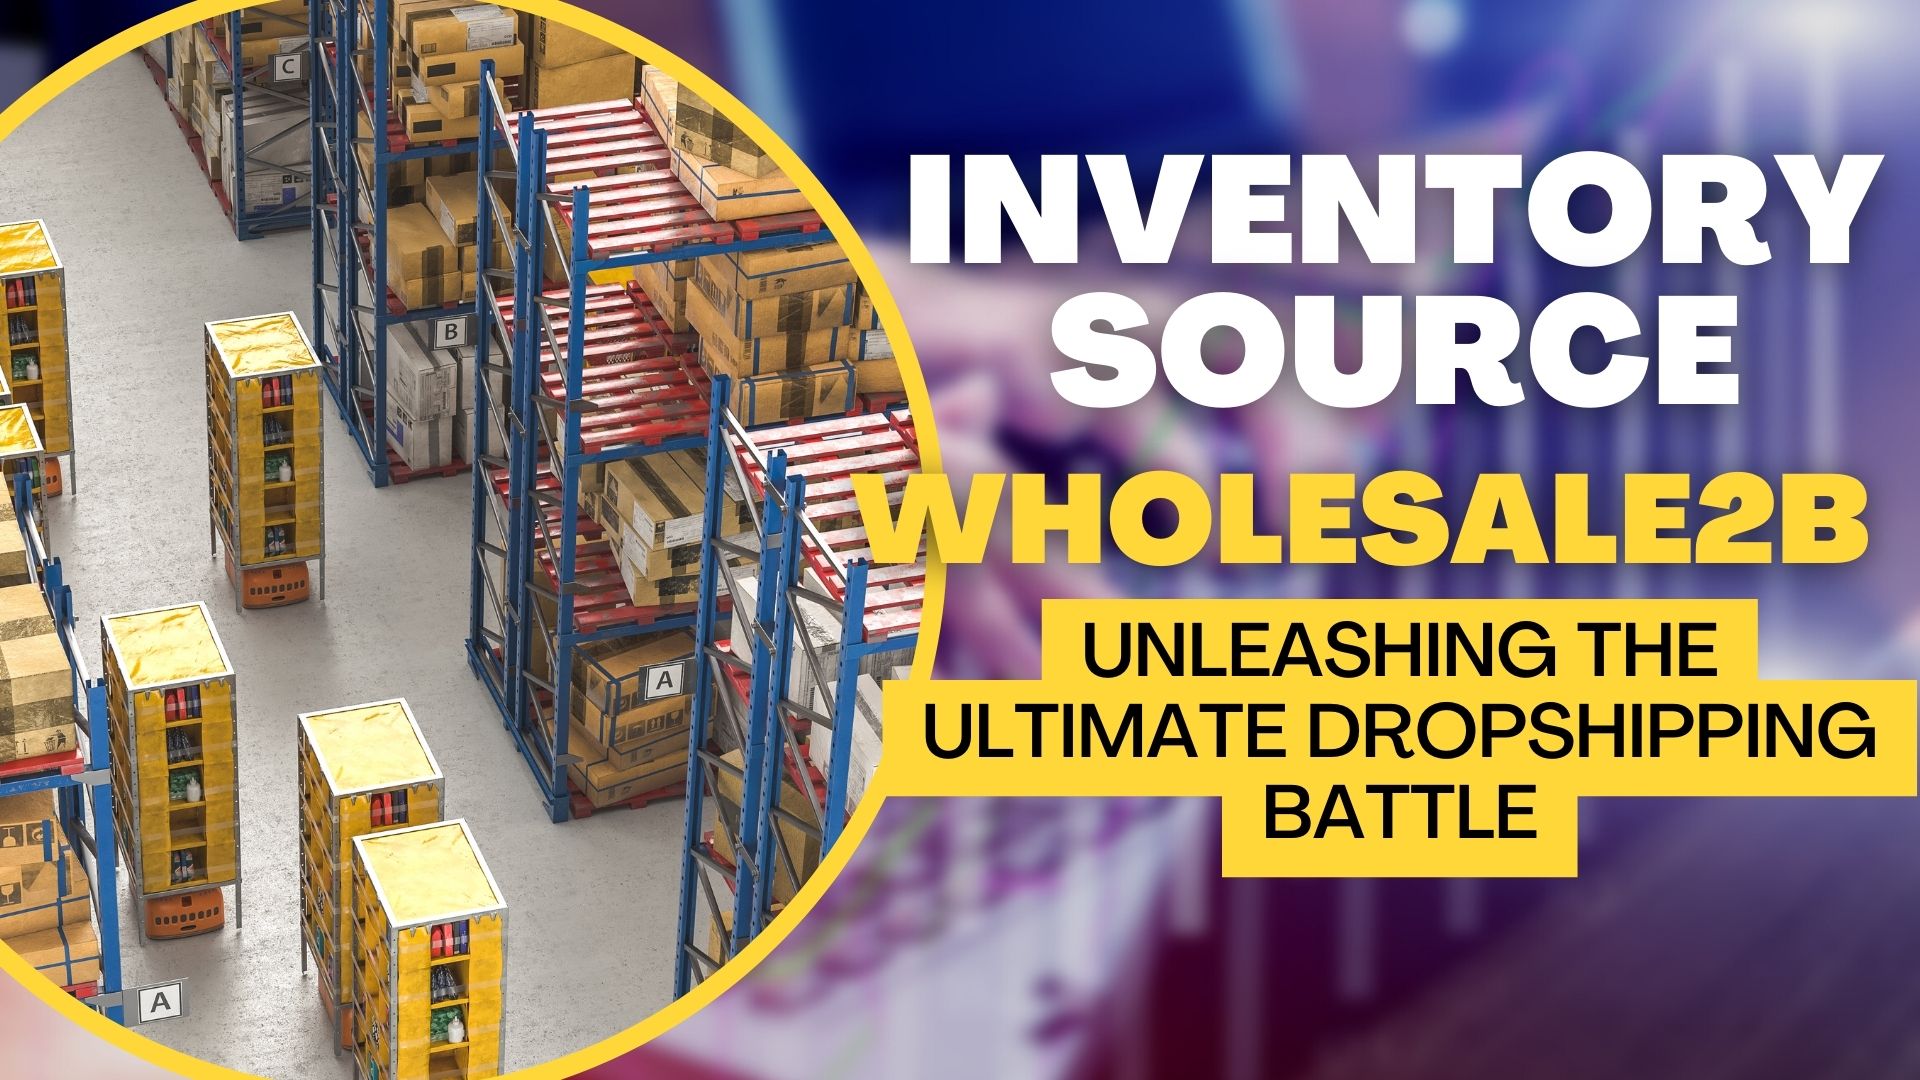 Inventory Source Vs Wholesale2B